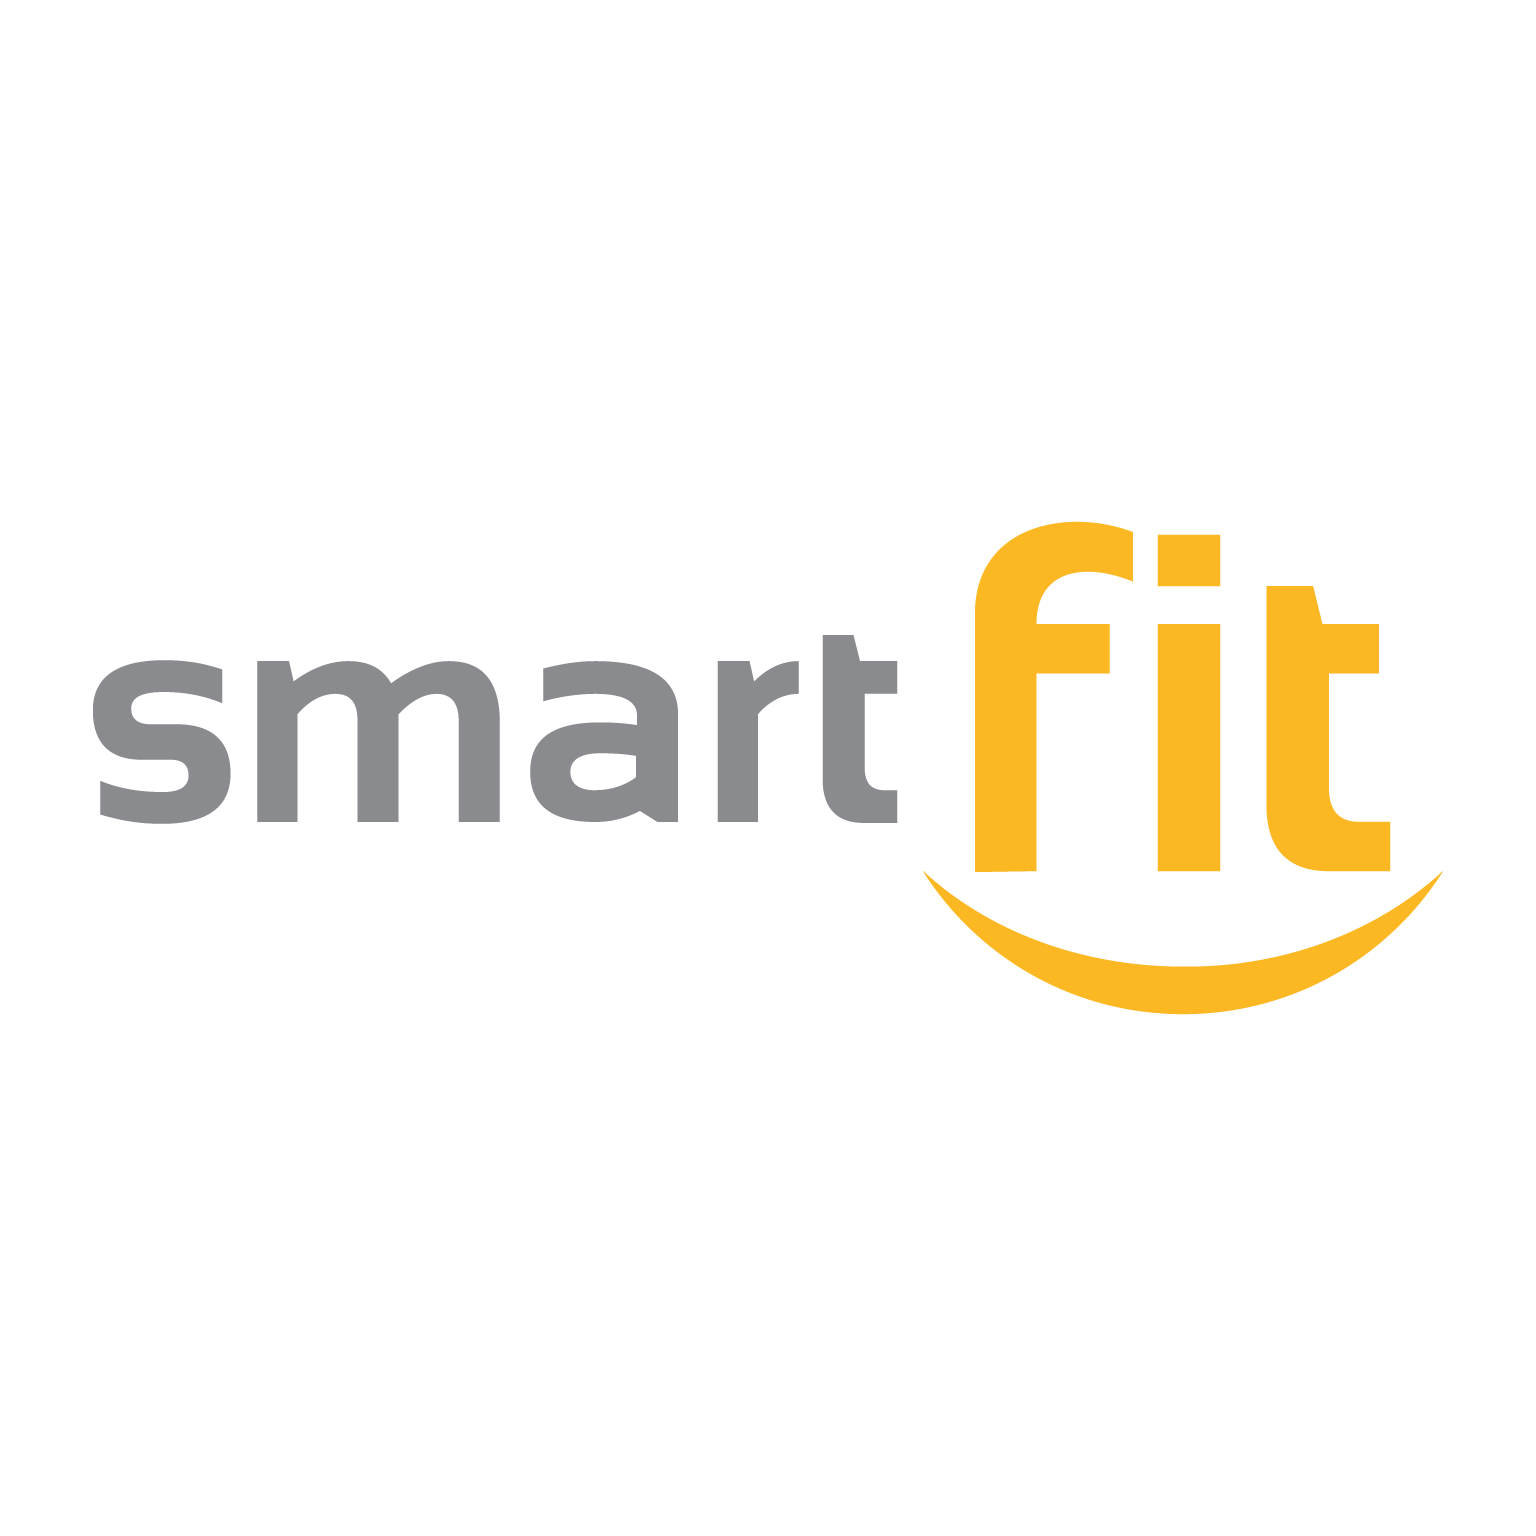 brasao do smart fit